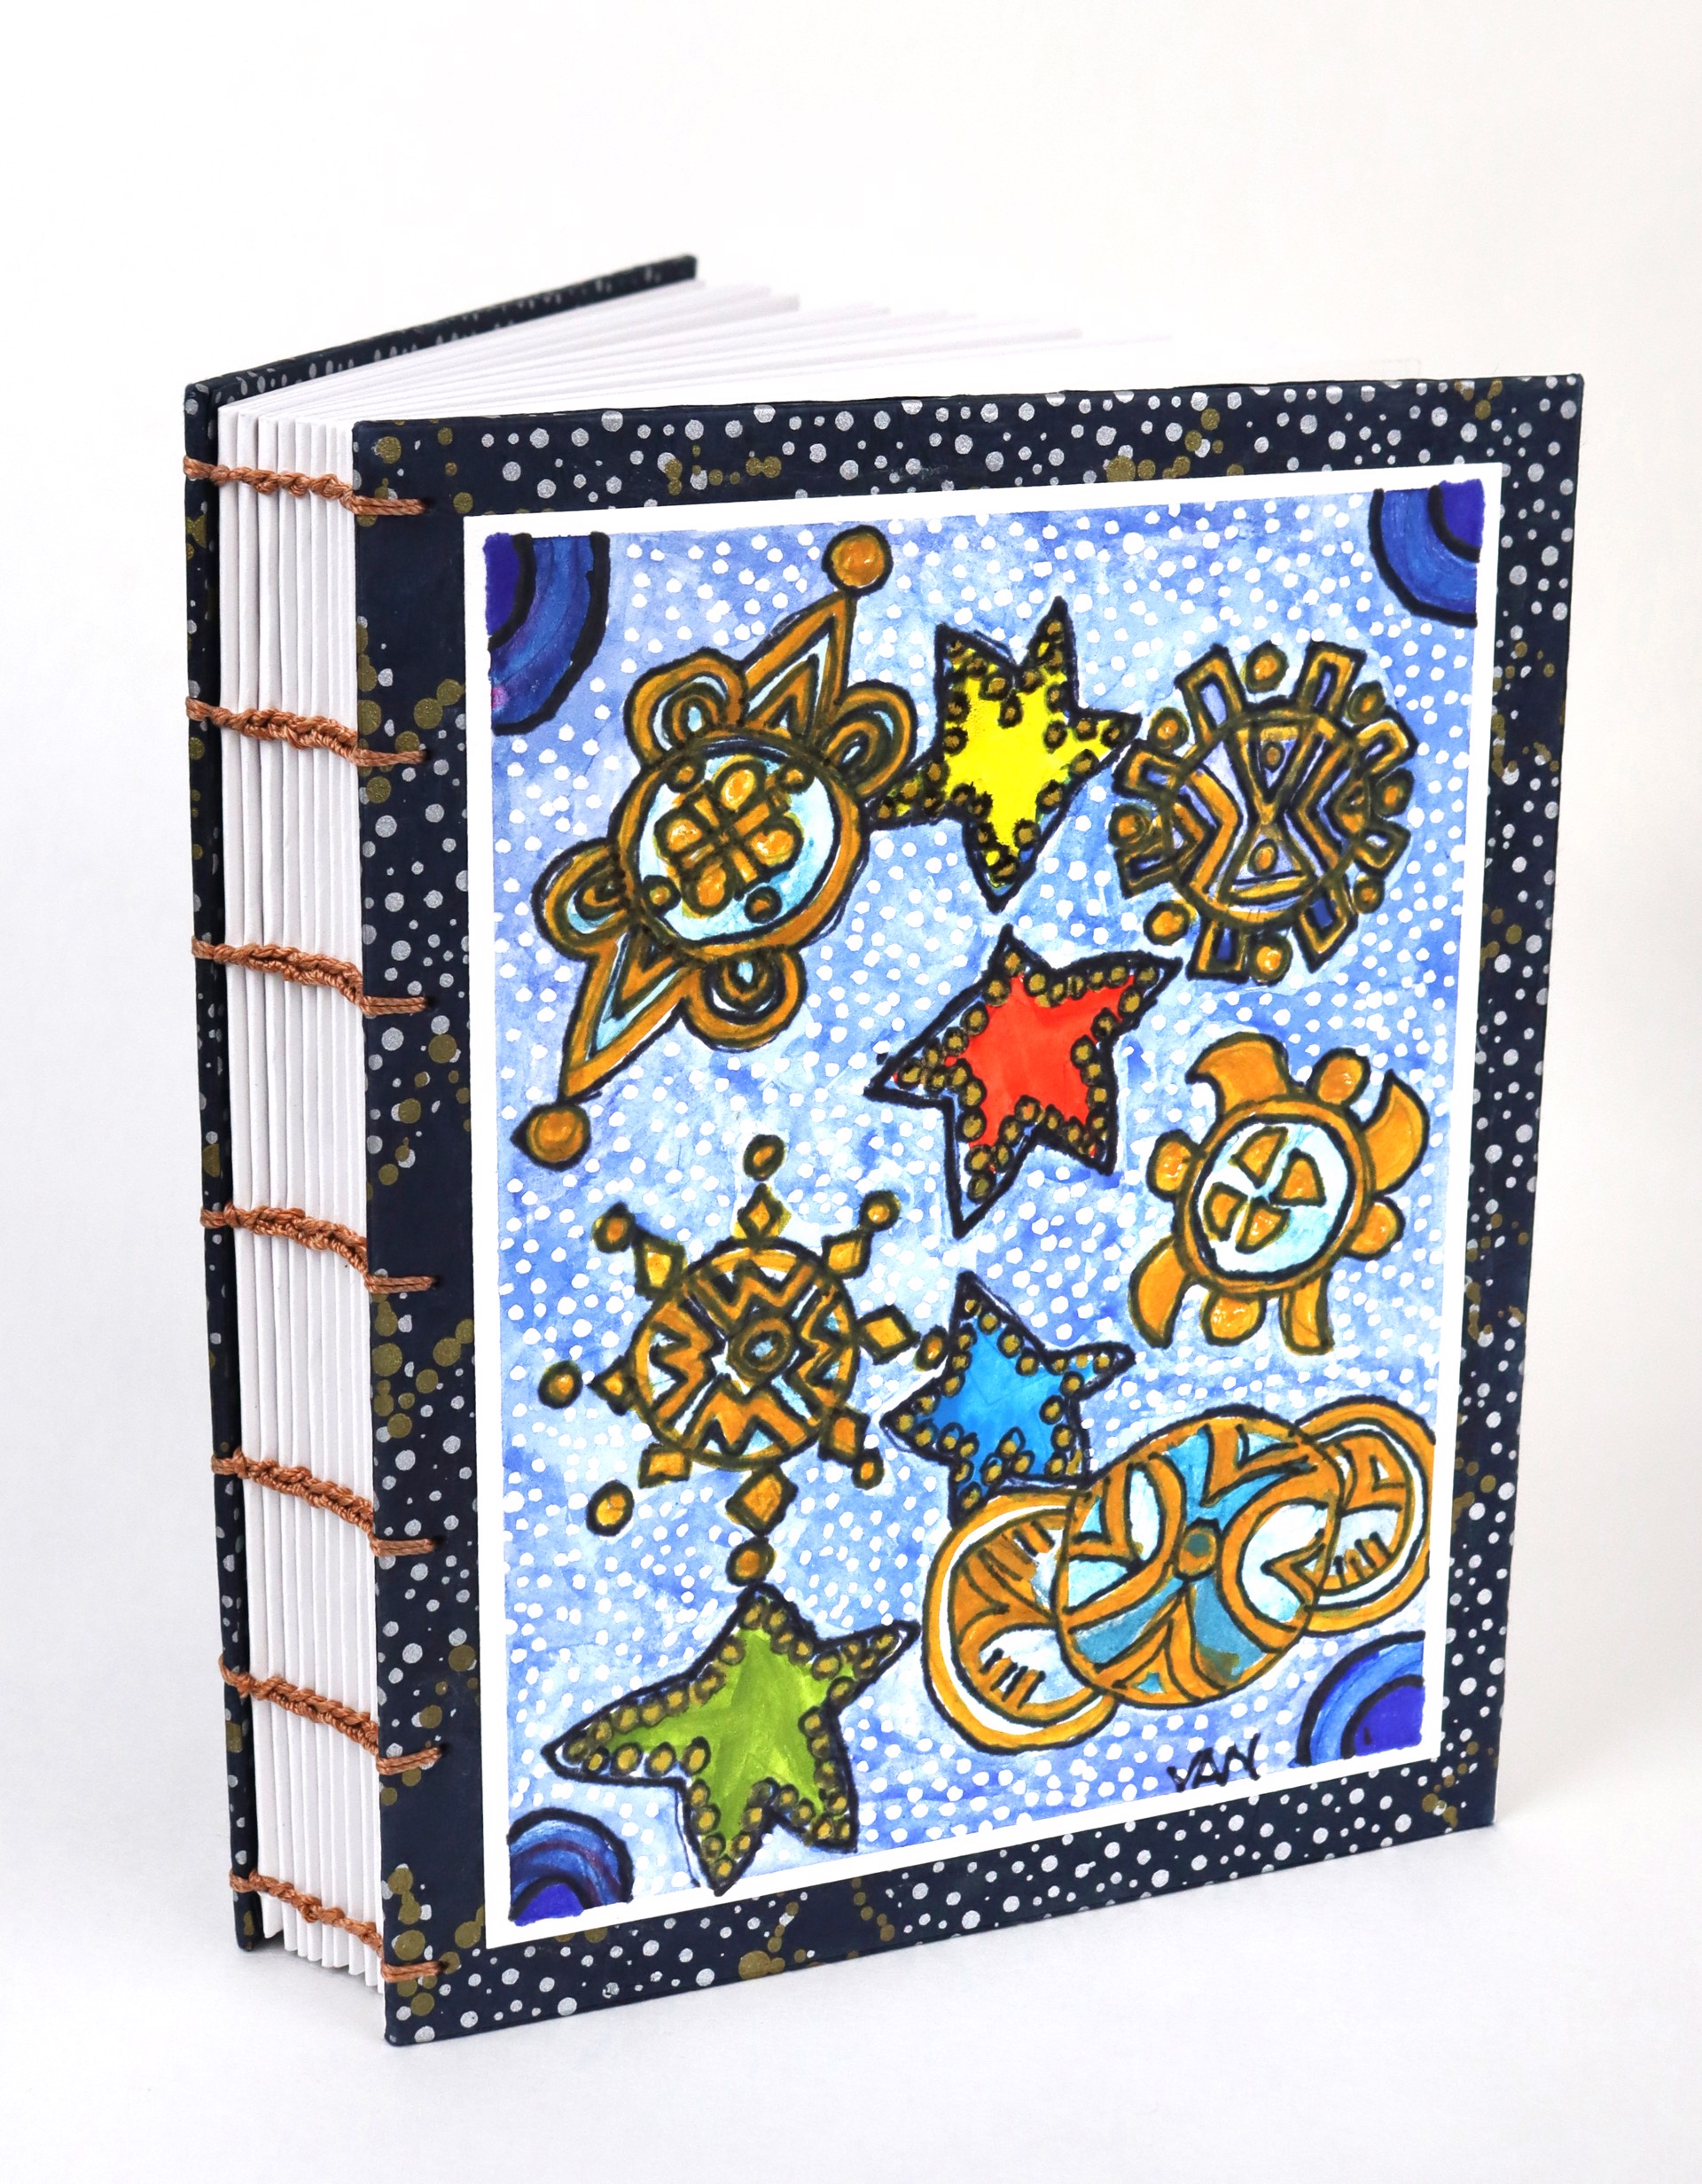 Beyond the Stars Handmade Journal by Vanessa Monroe